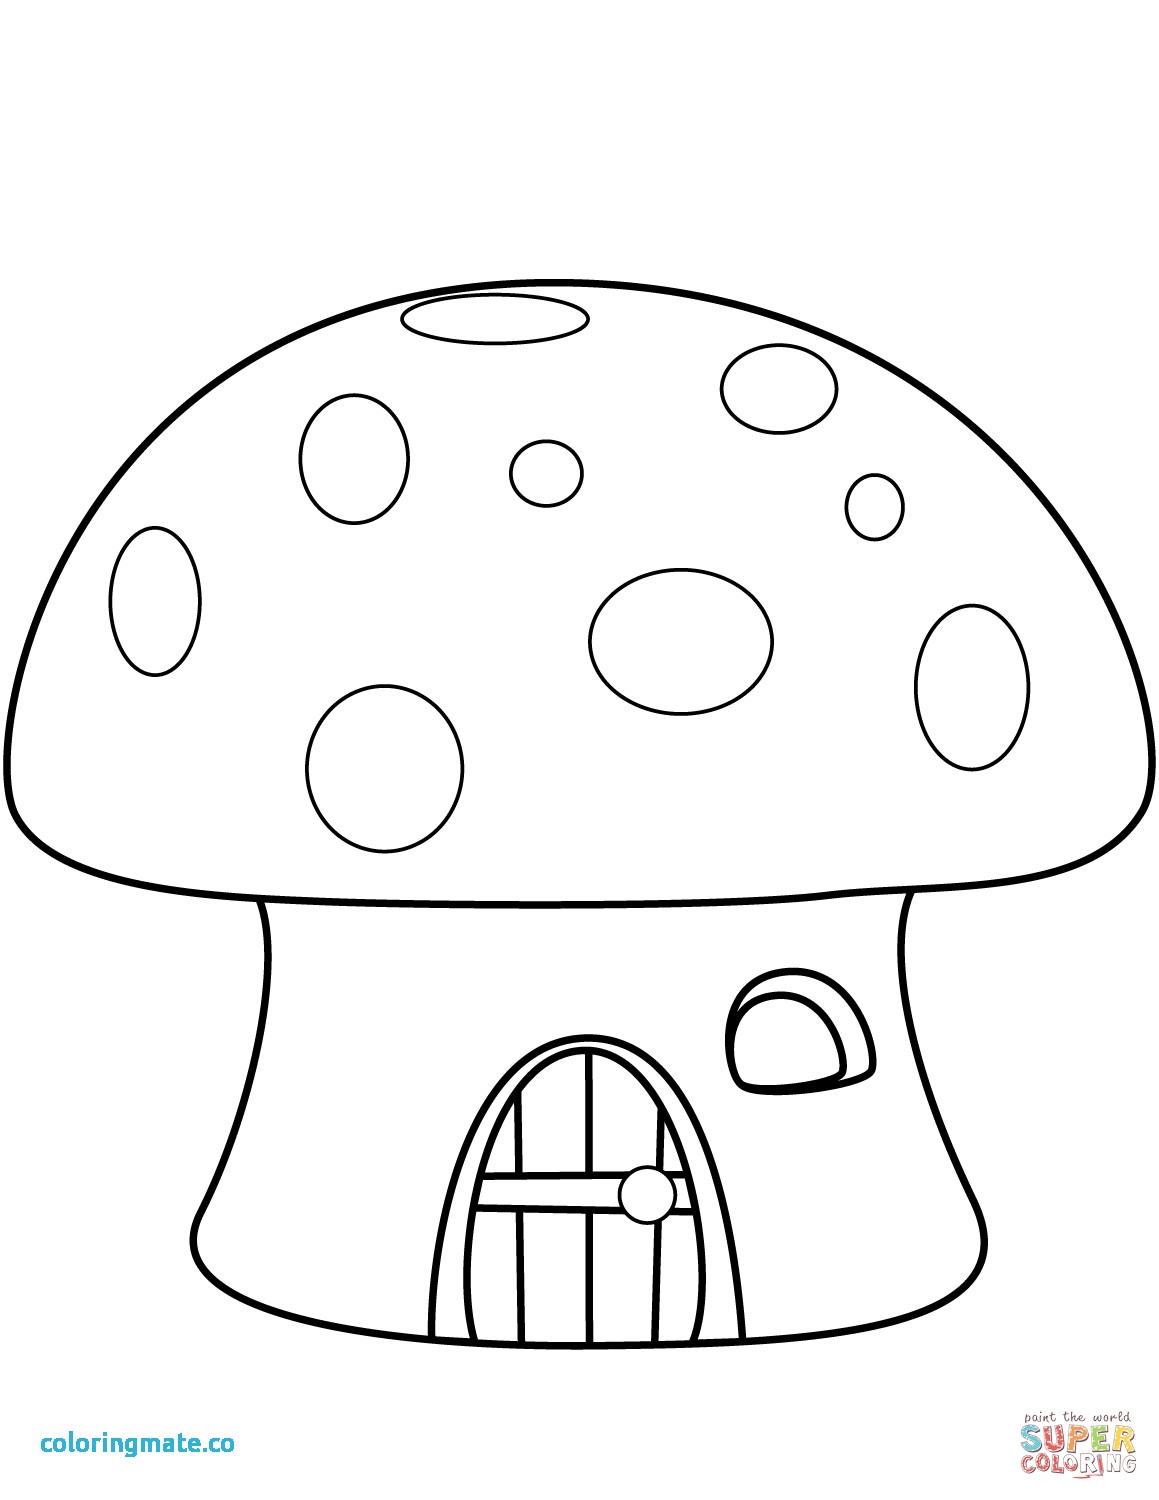 Free Printable Mushroom Coloring Pages at GetColorings com Free